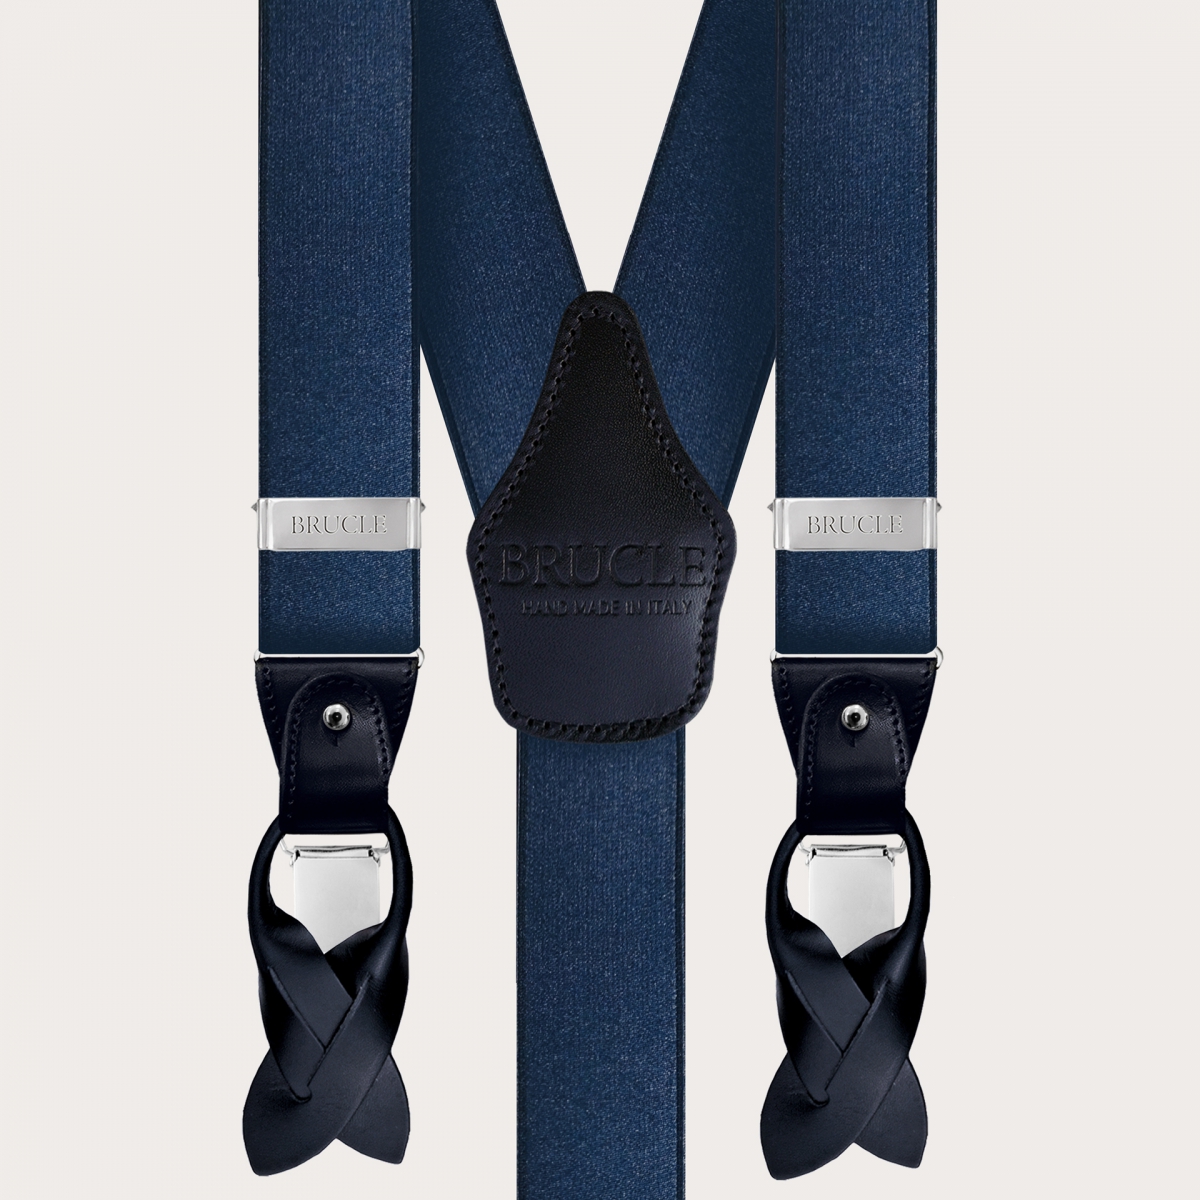 Braces suspenders polished blue